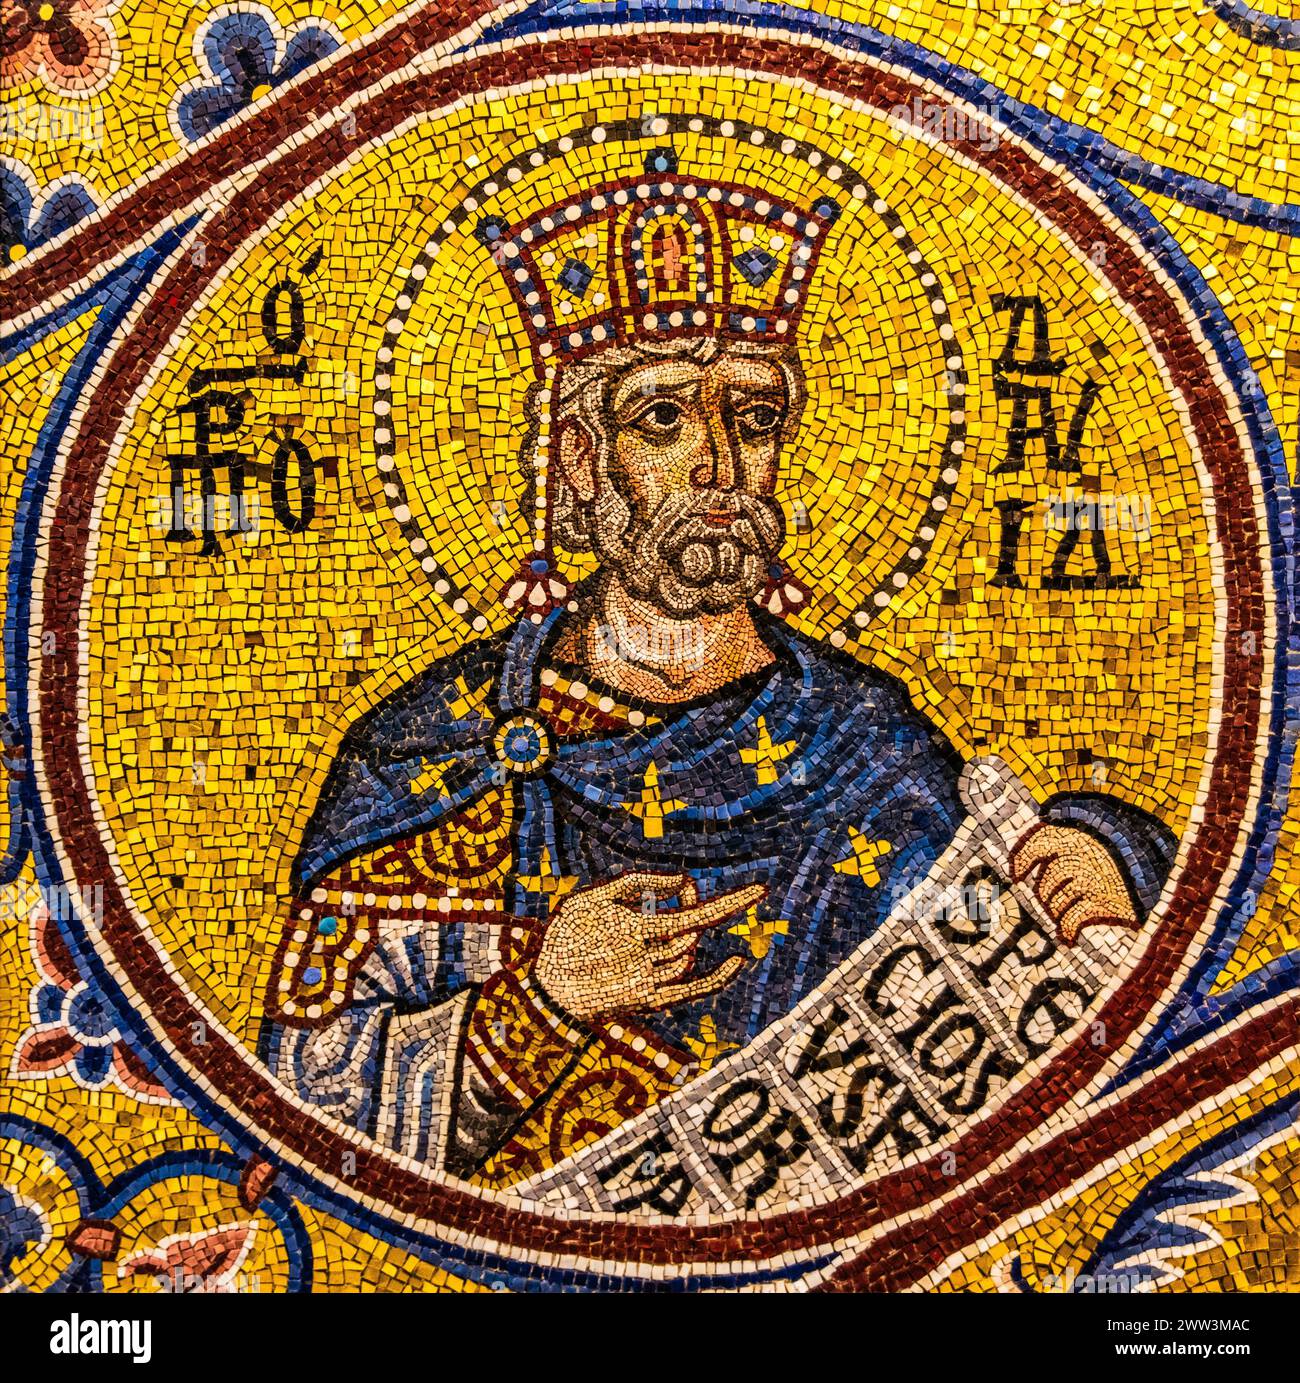 King William II, mosaic copy, Monreale Cathedral, Palermo, mosaic school producing mosaic masters, Spilimbergo, city of mosaic art, Friuli, Italy Stock Photo